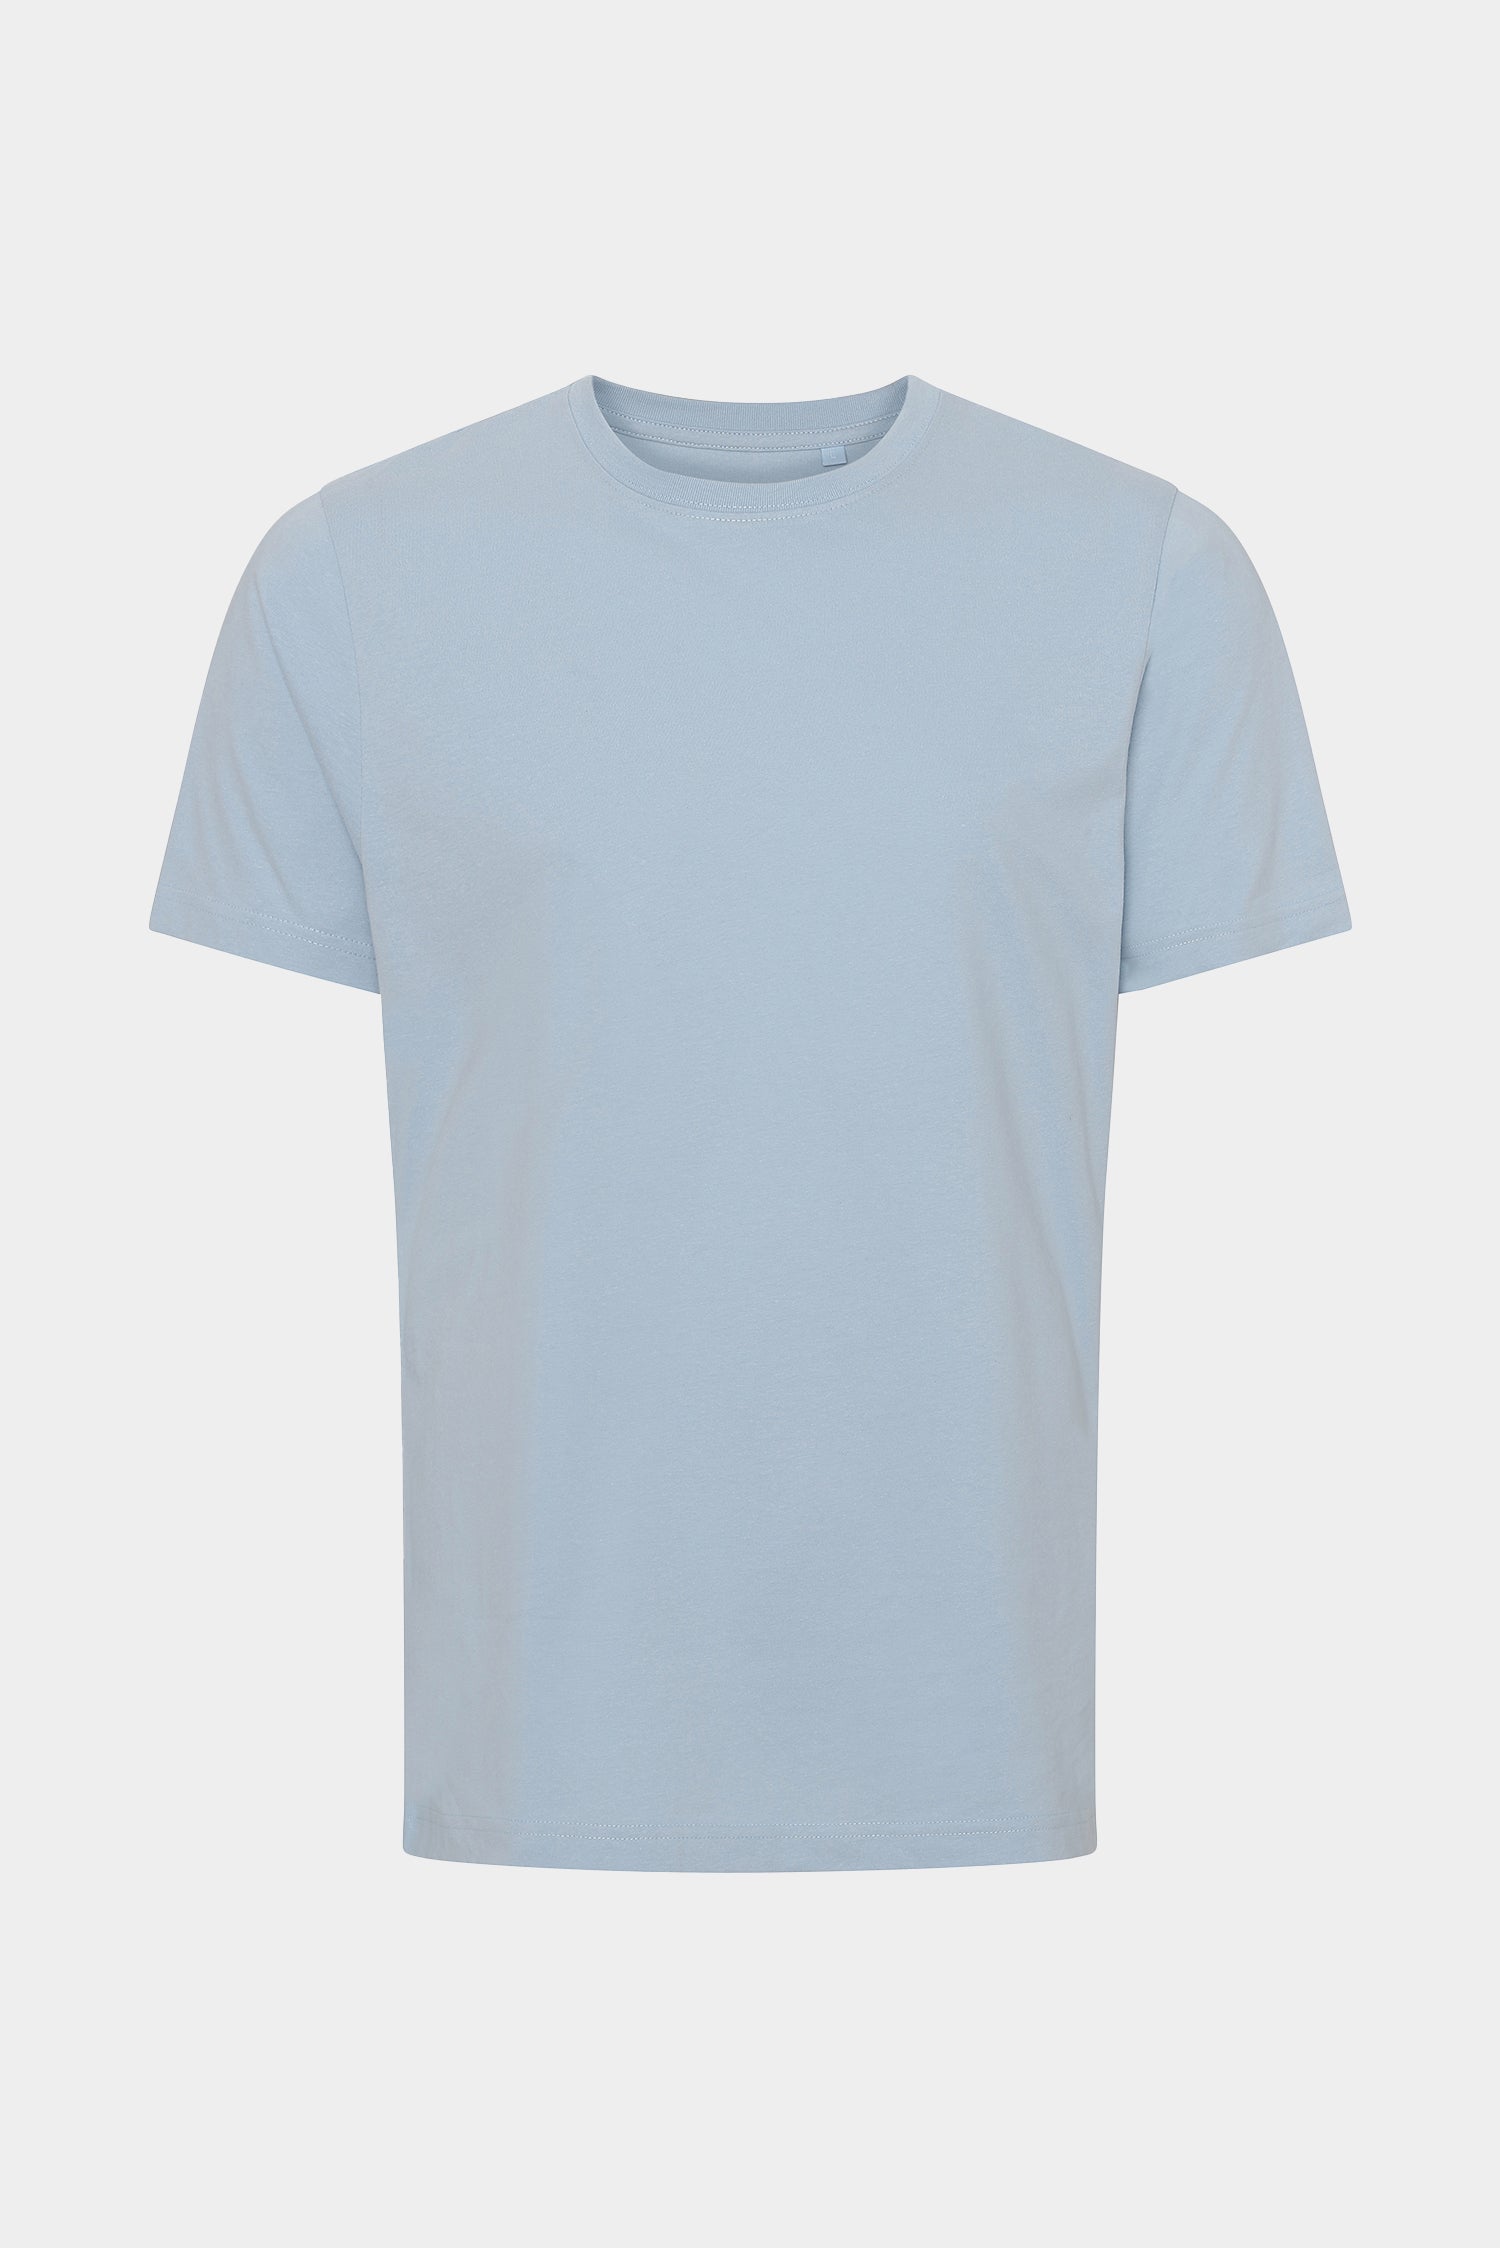 MOOD MINOR økologisk basic tshirt lyseblå sky blue